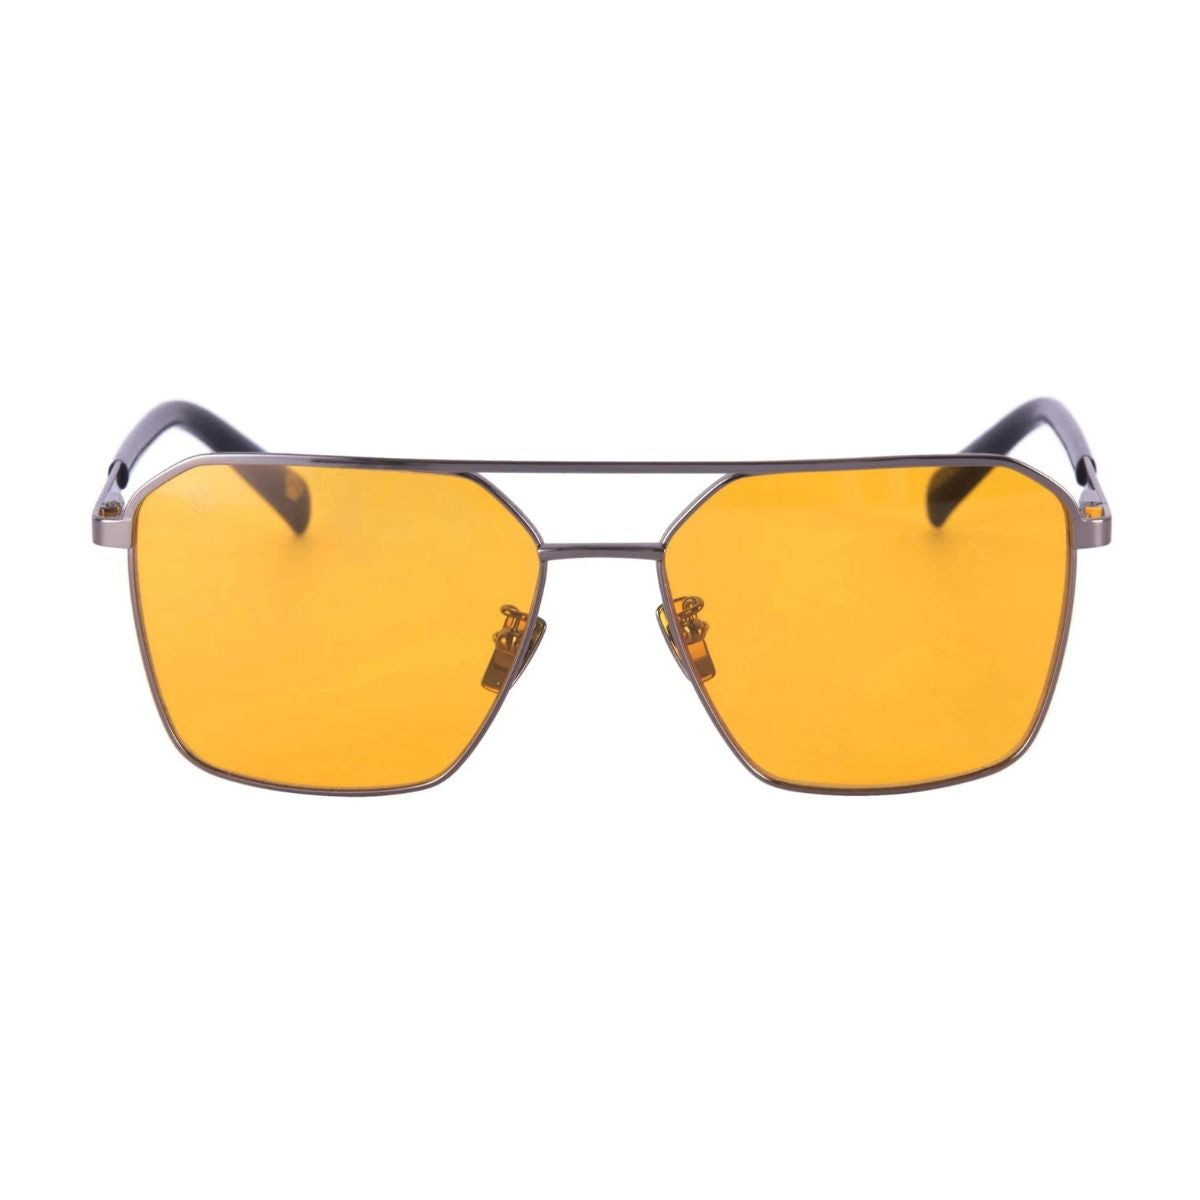 "The Monk Revolution C2 Trendy Eyewear Sunglasses For Men And Women At Optorium"